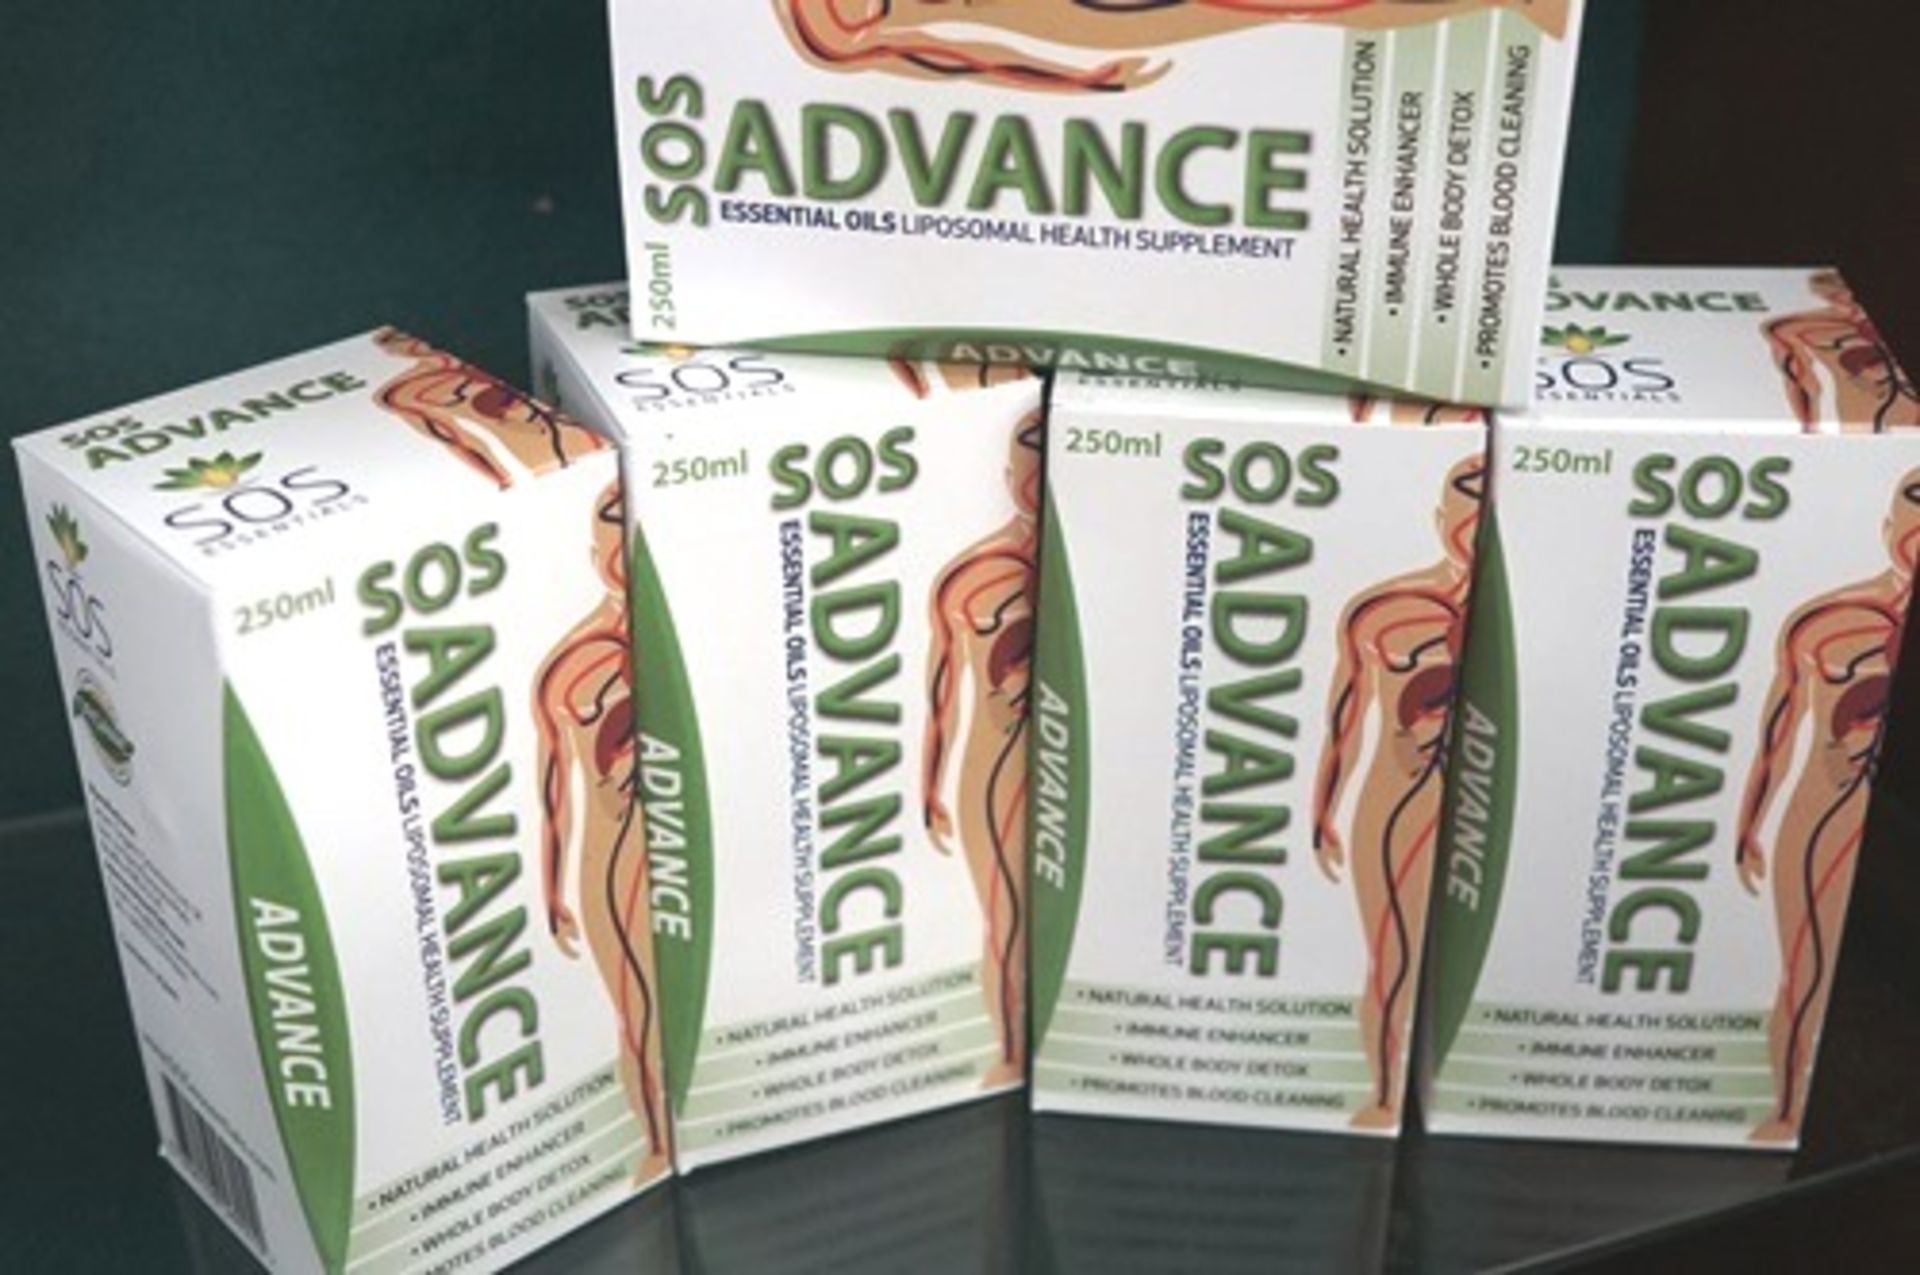 5 x 250ml bottles of SOS Advance Whole Body Detox Liquid, expiry 03/24 - New in box (C14B)